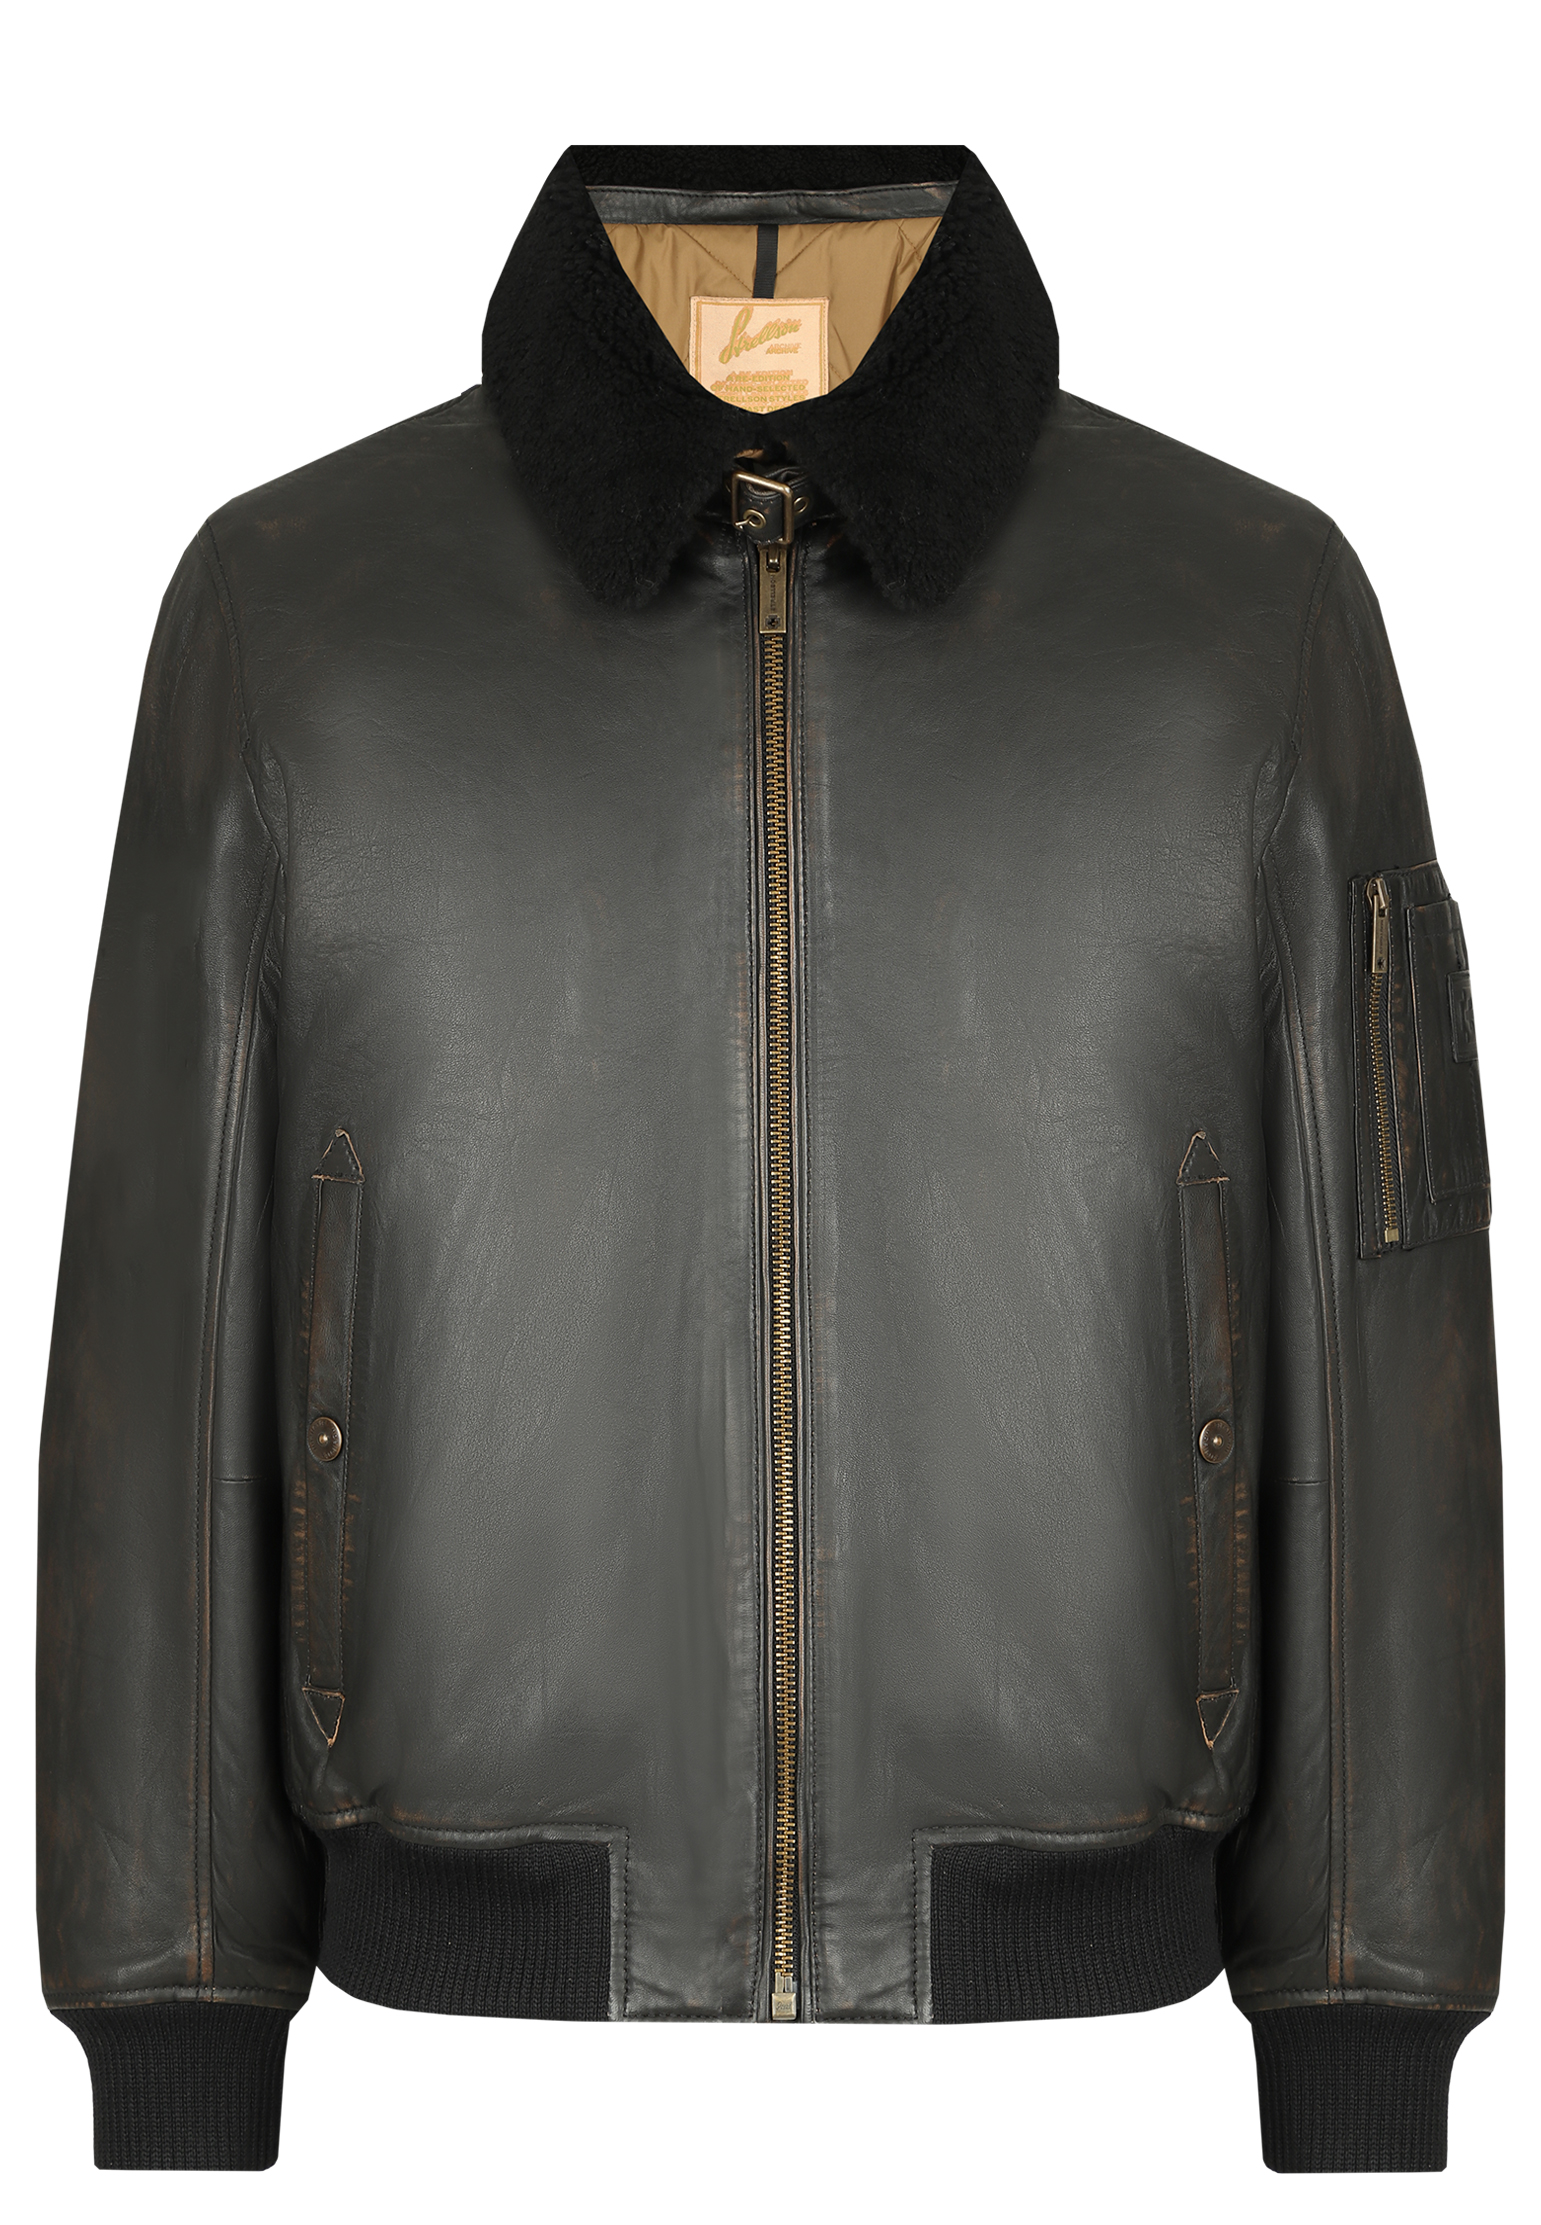 Кожаная куртка мужская Strellson 153134 черная 52 EU